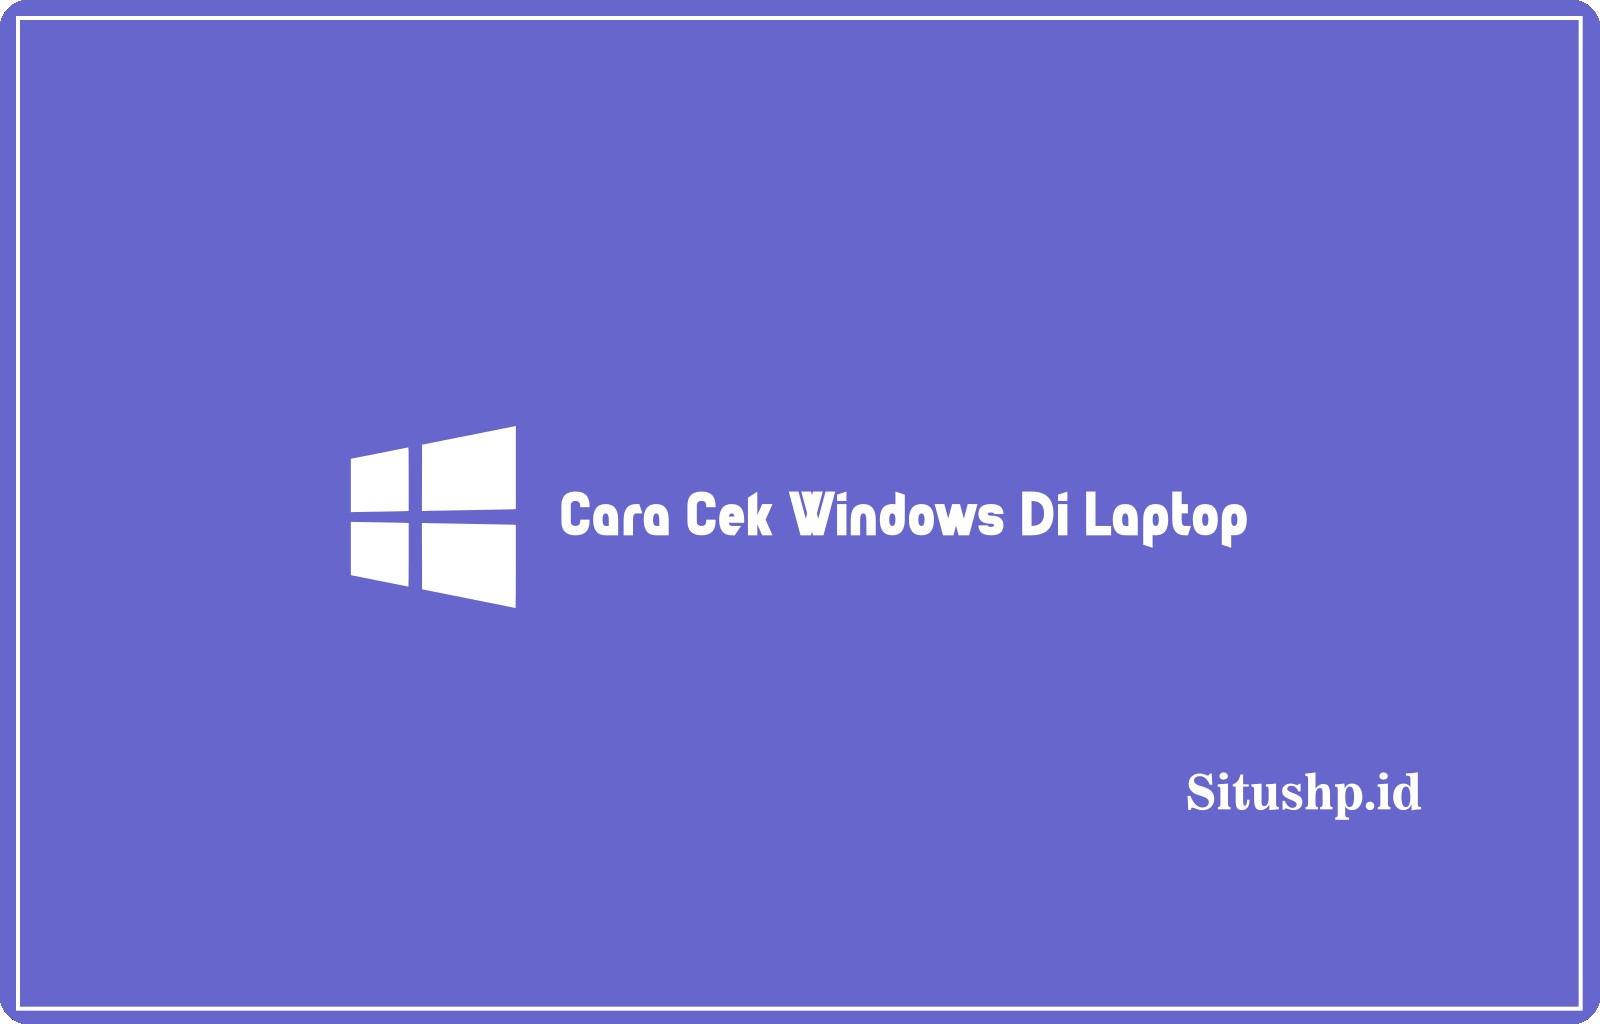 Cara Cek Windows Di Laptop